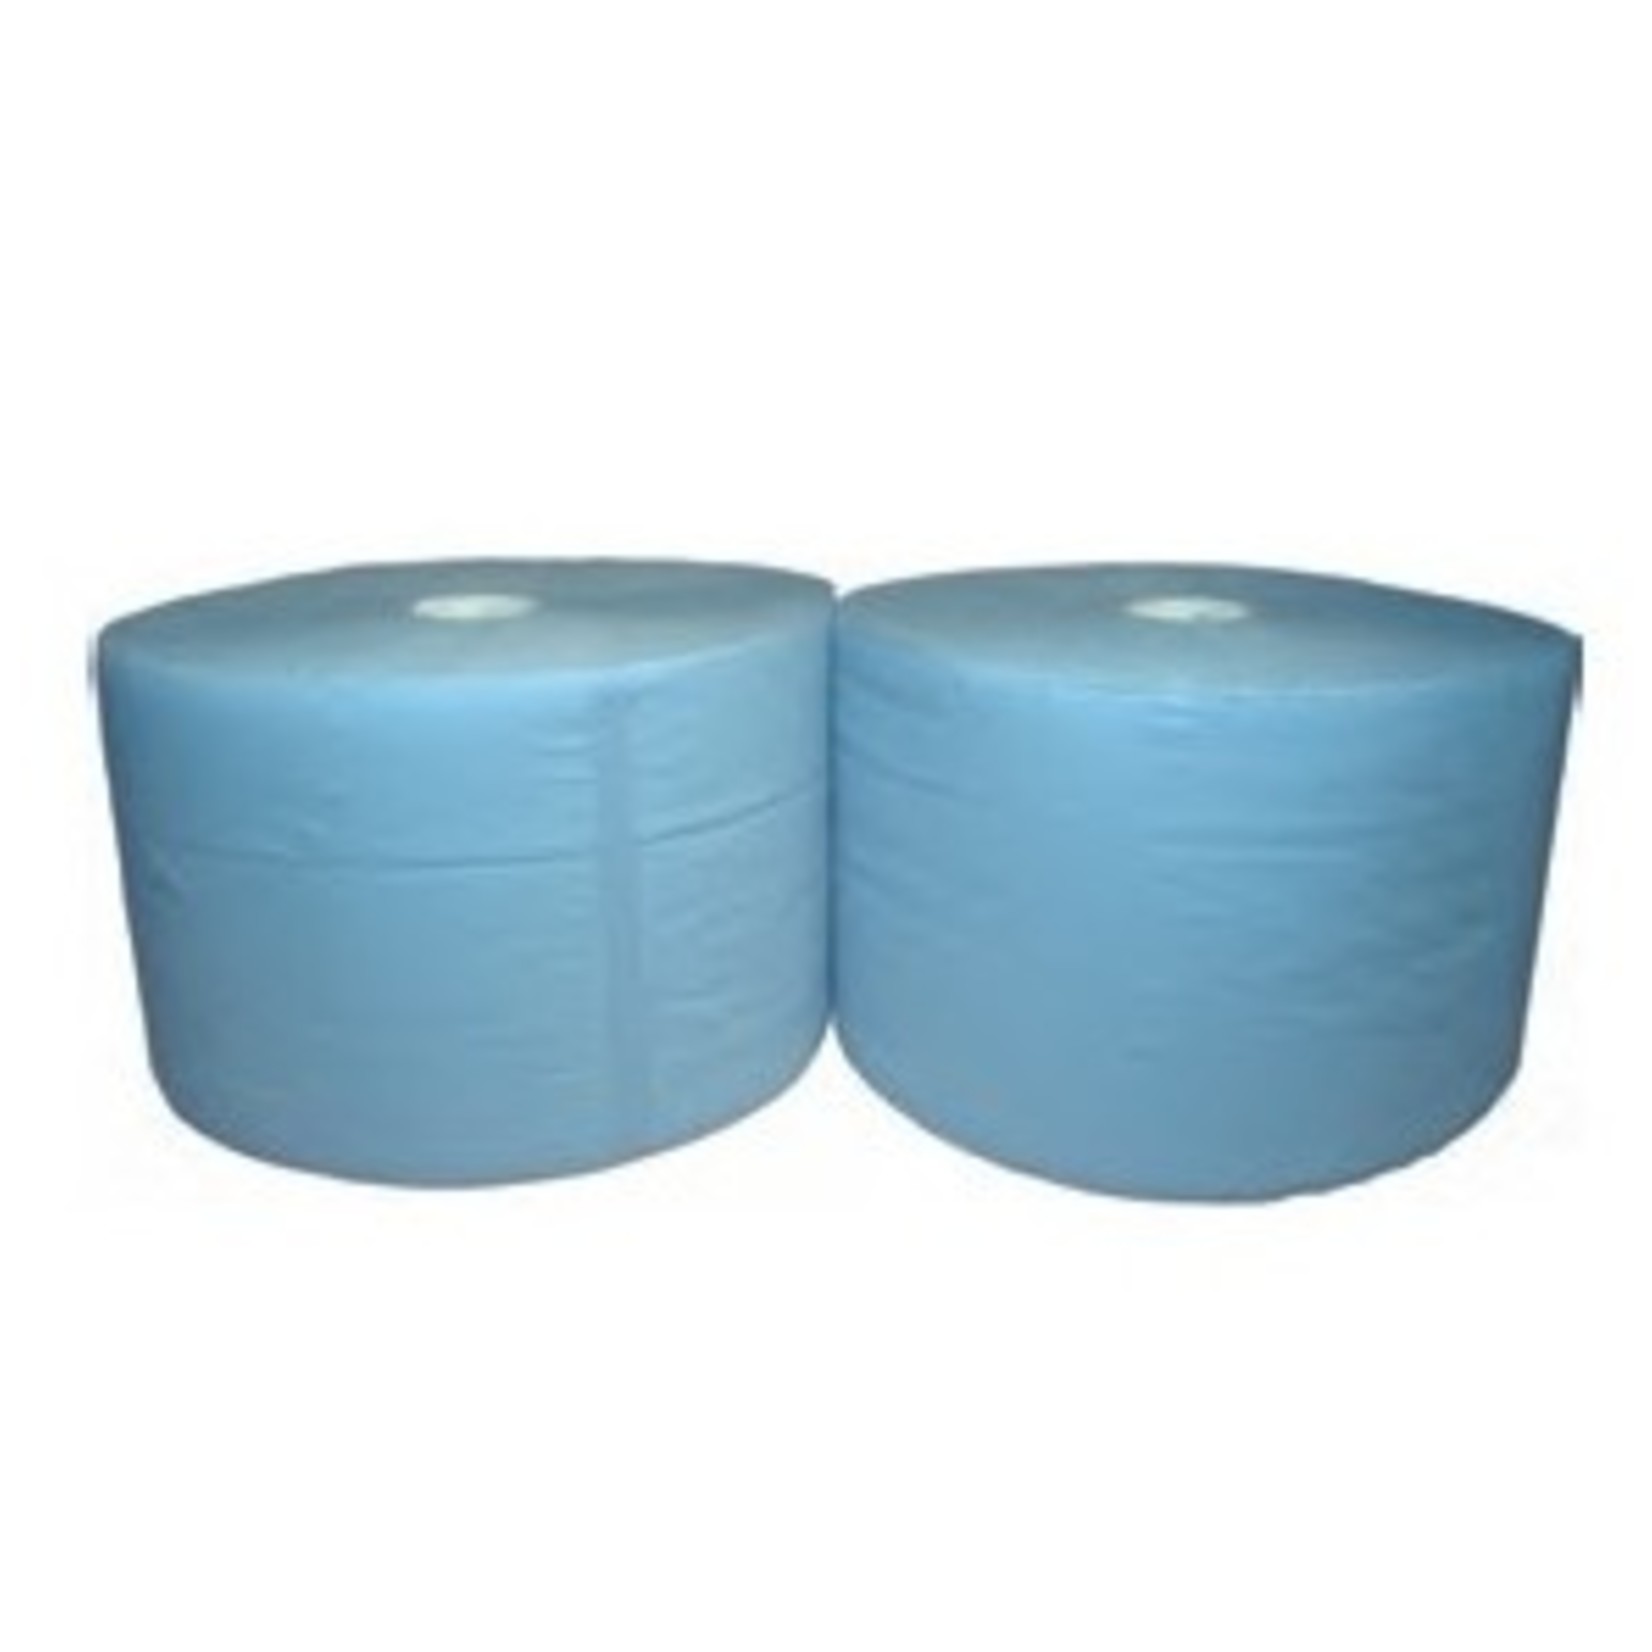 Uierpapier 3-laags verlijmd, blauw, 1000 vel, à 2rol